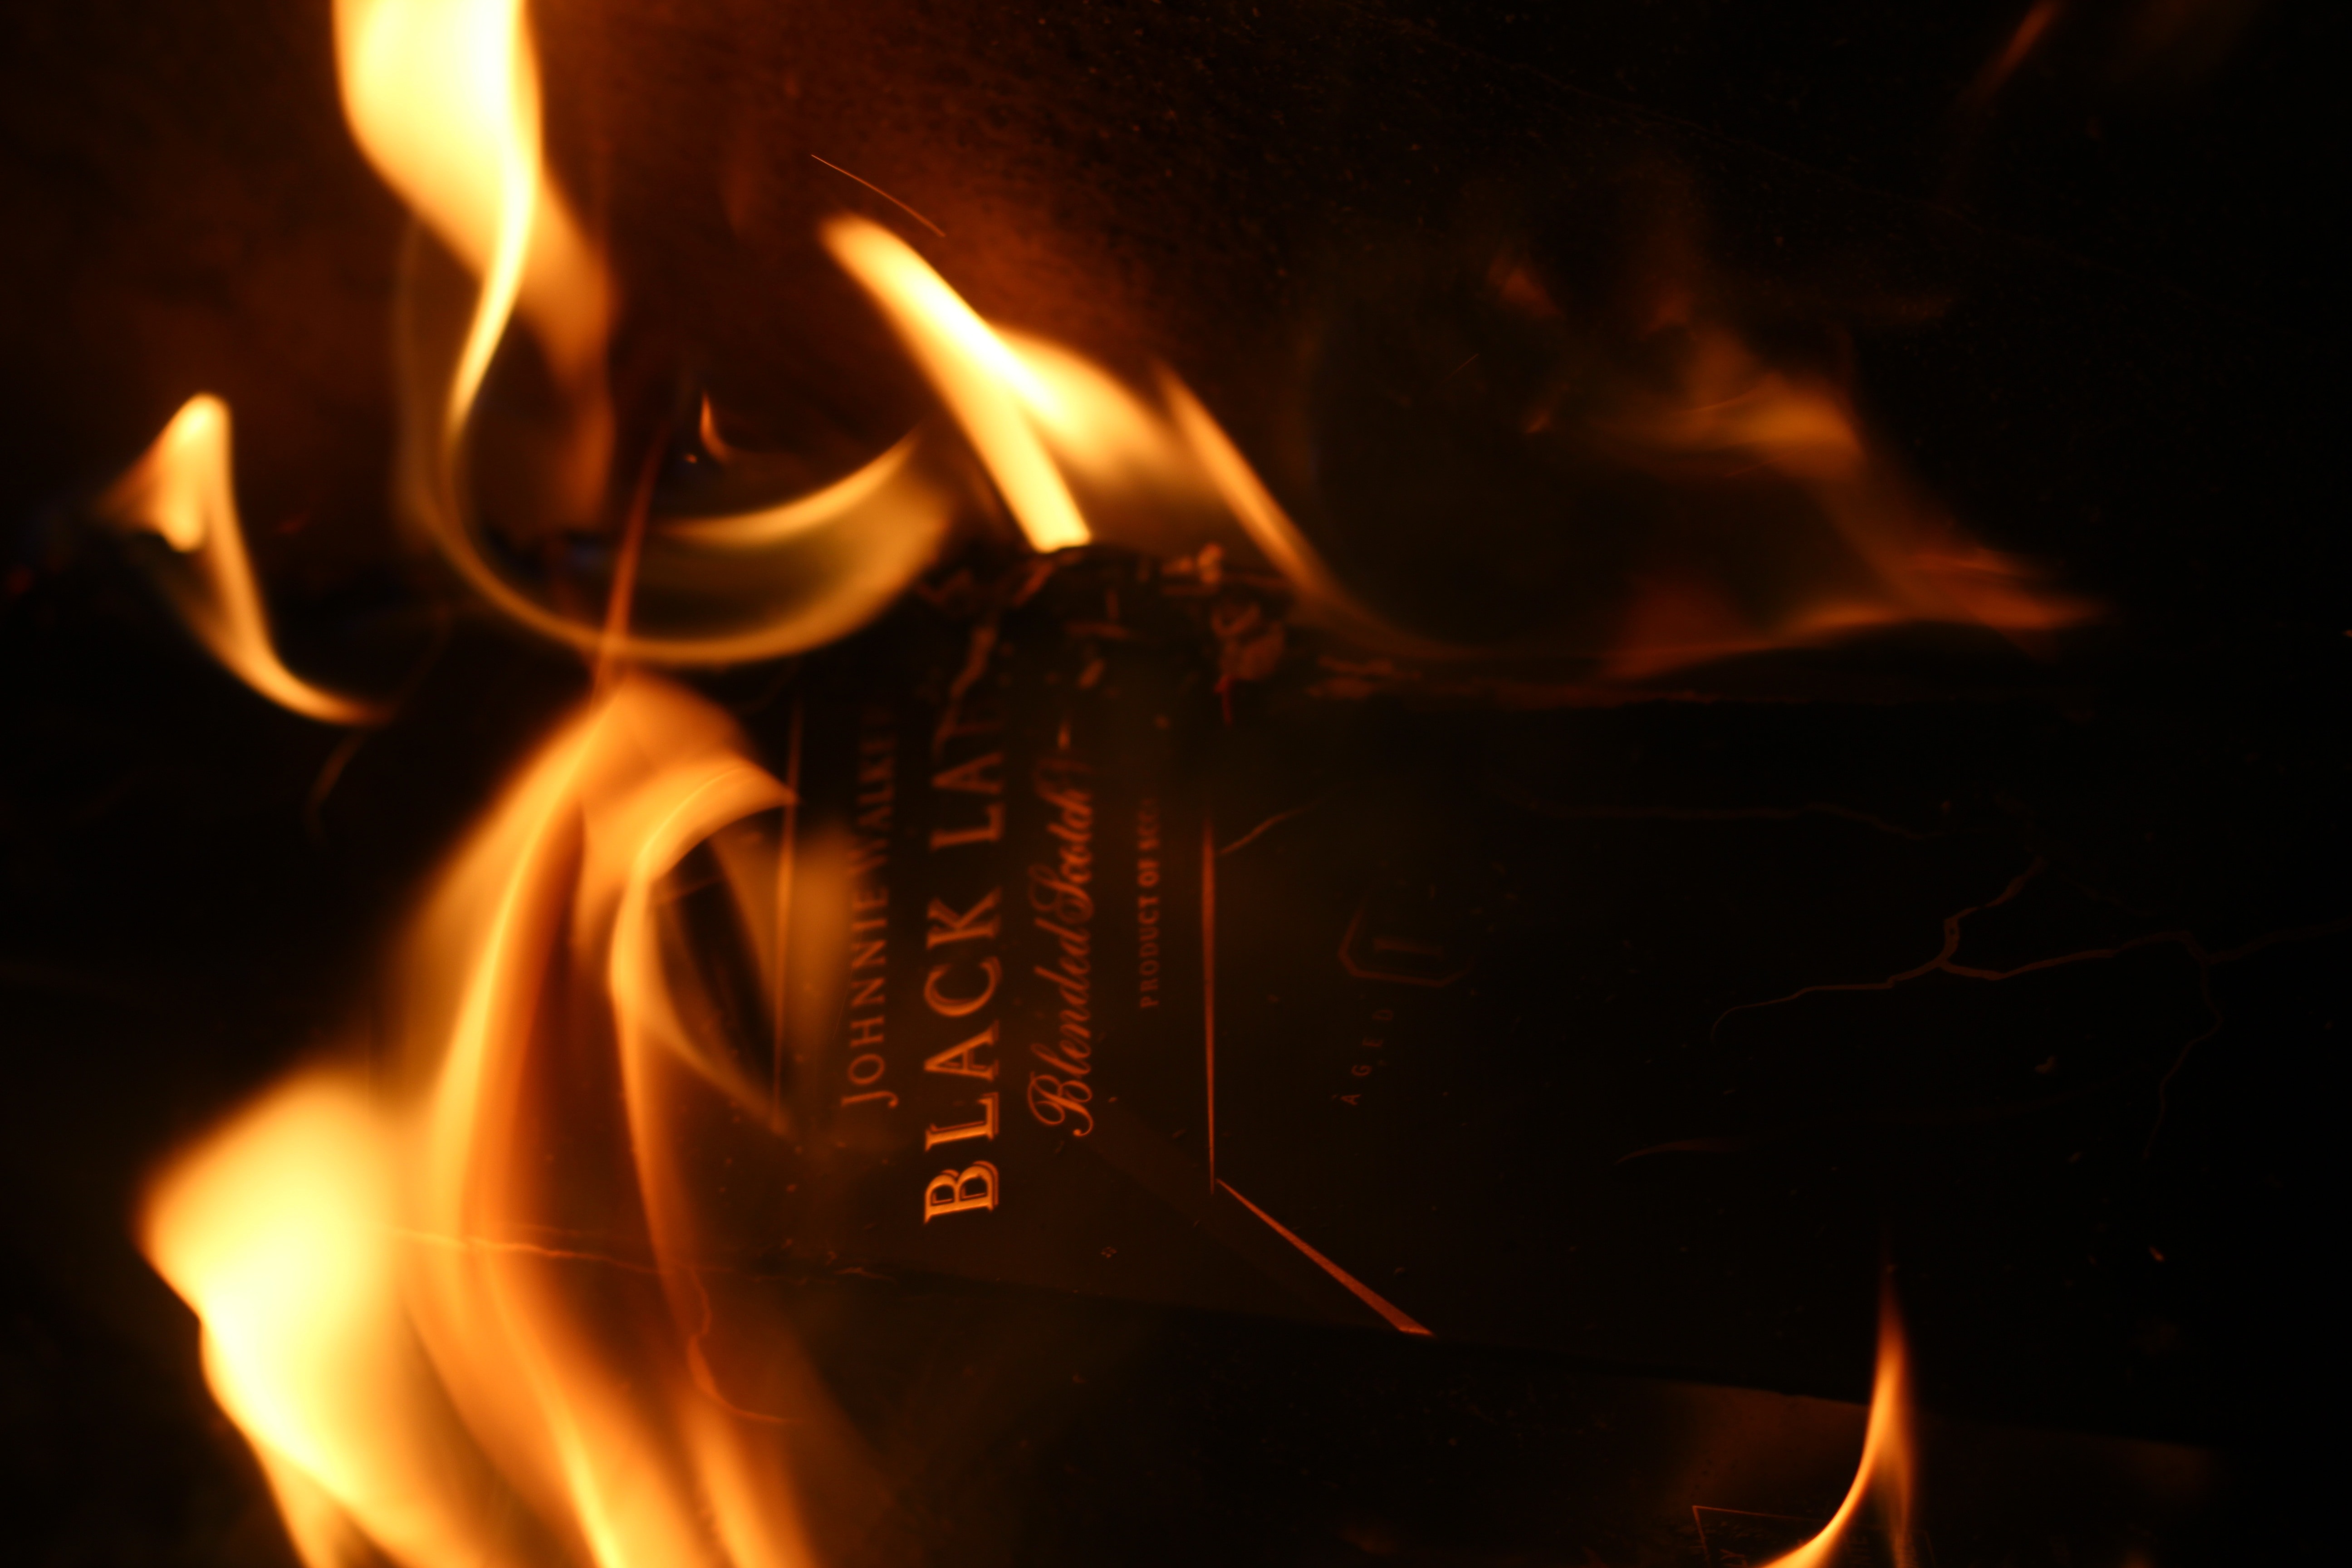 Johnnie Walker Black Label box on fire